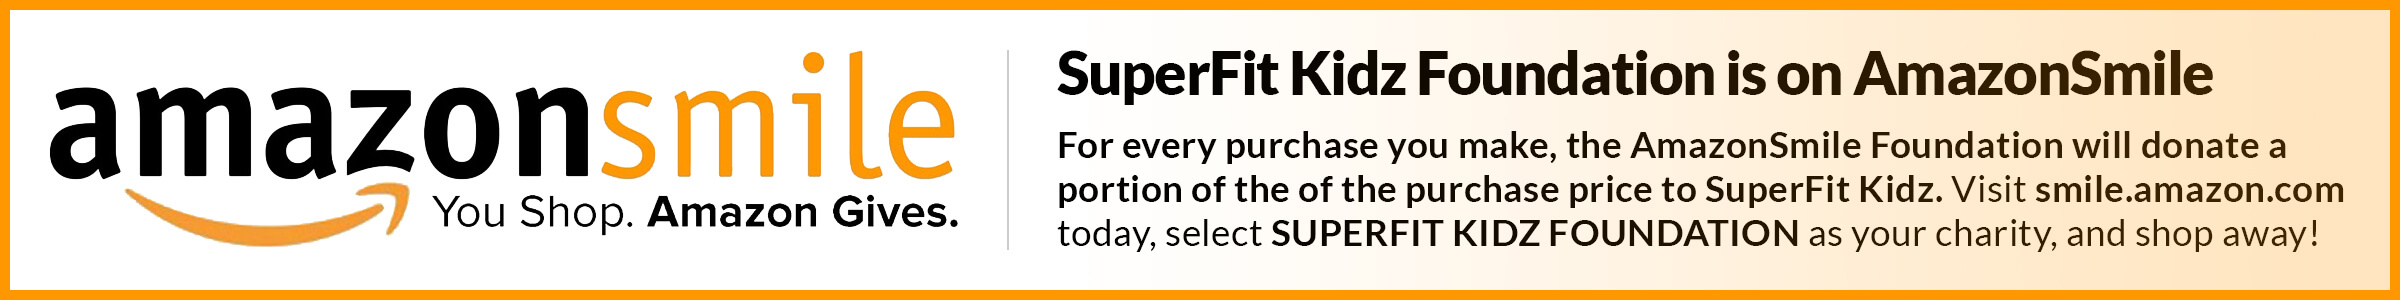 SuperFit Kidz is on AmazonSmile